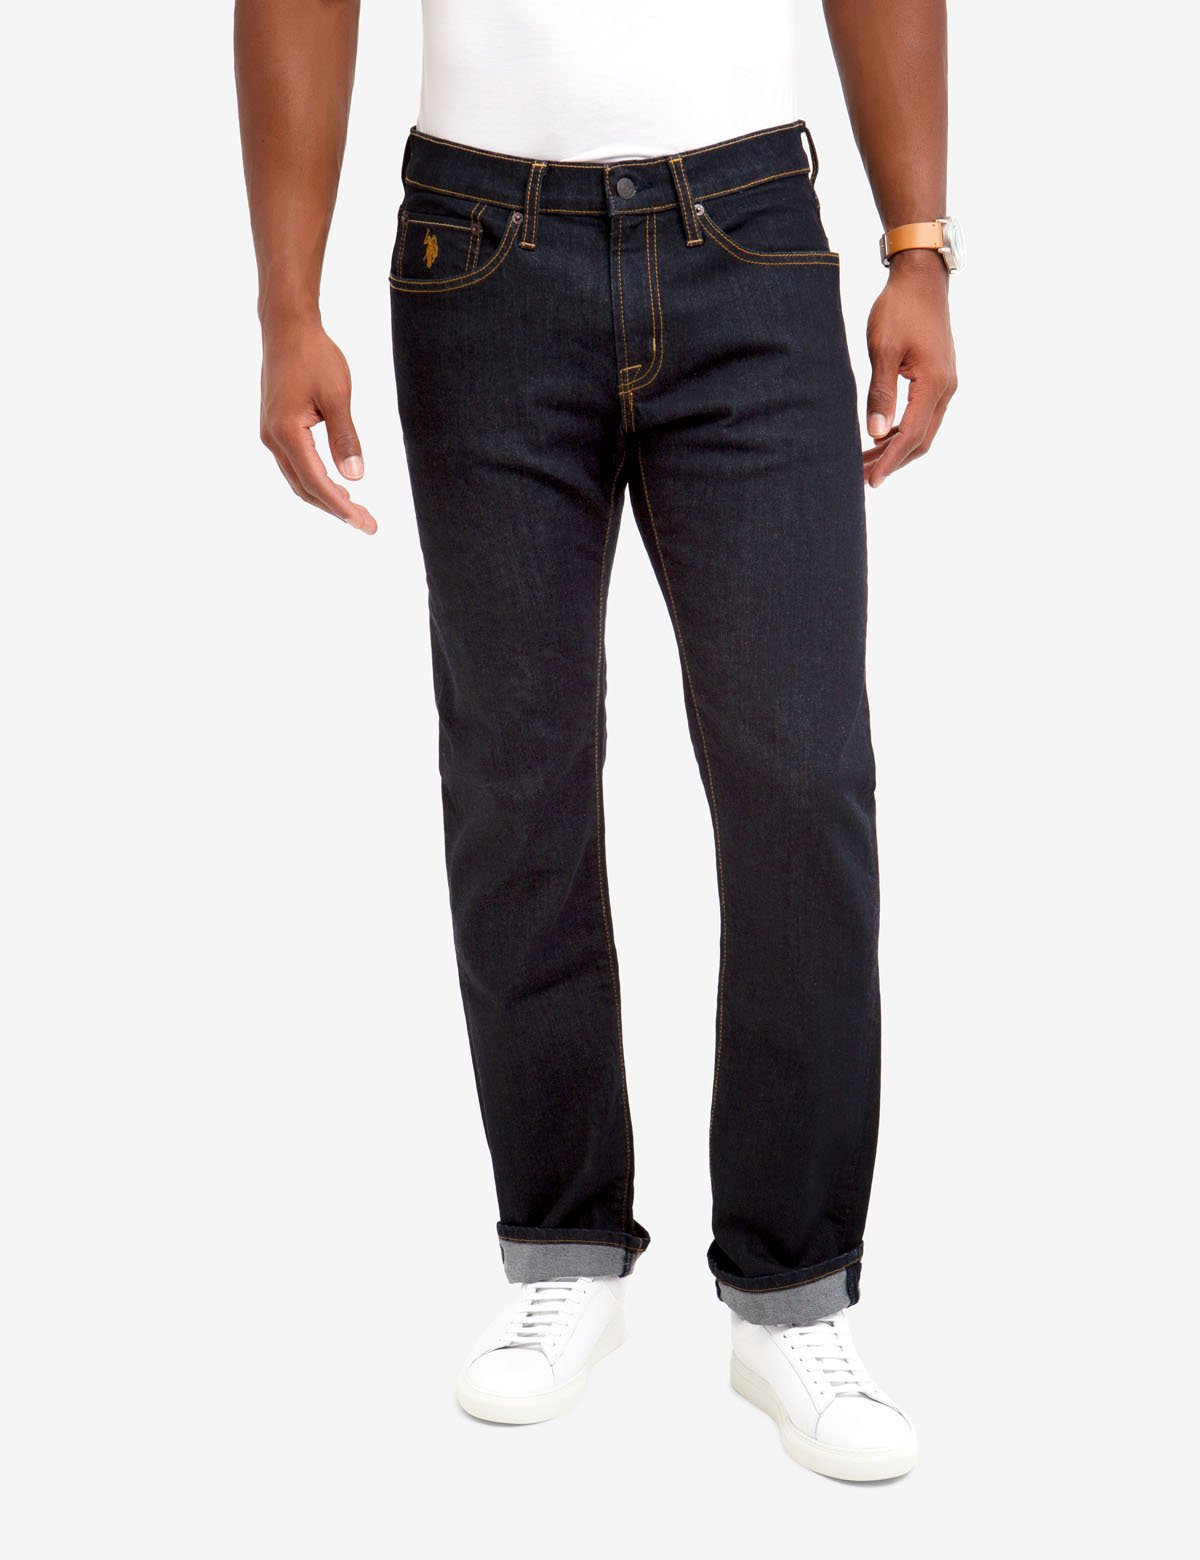 U.S. Polo Assn. Men's Jeans